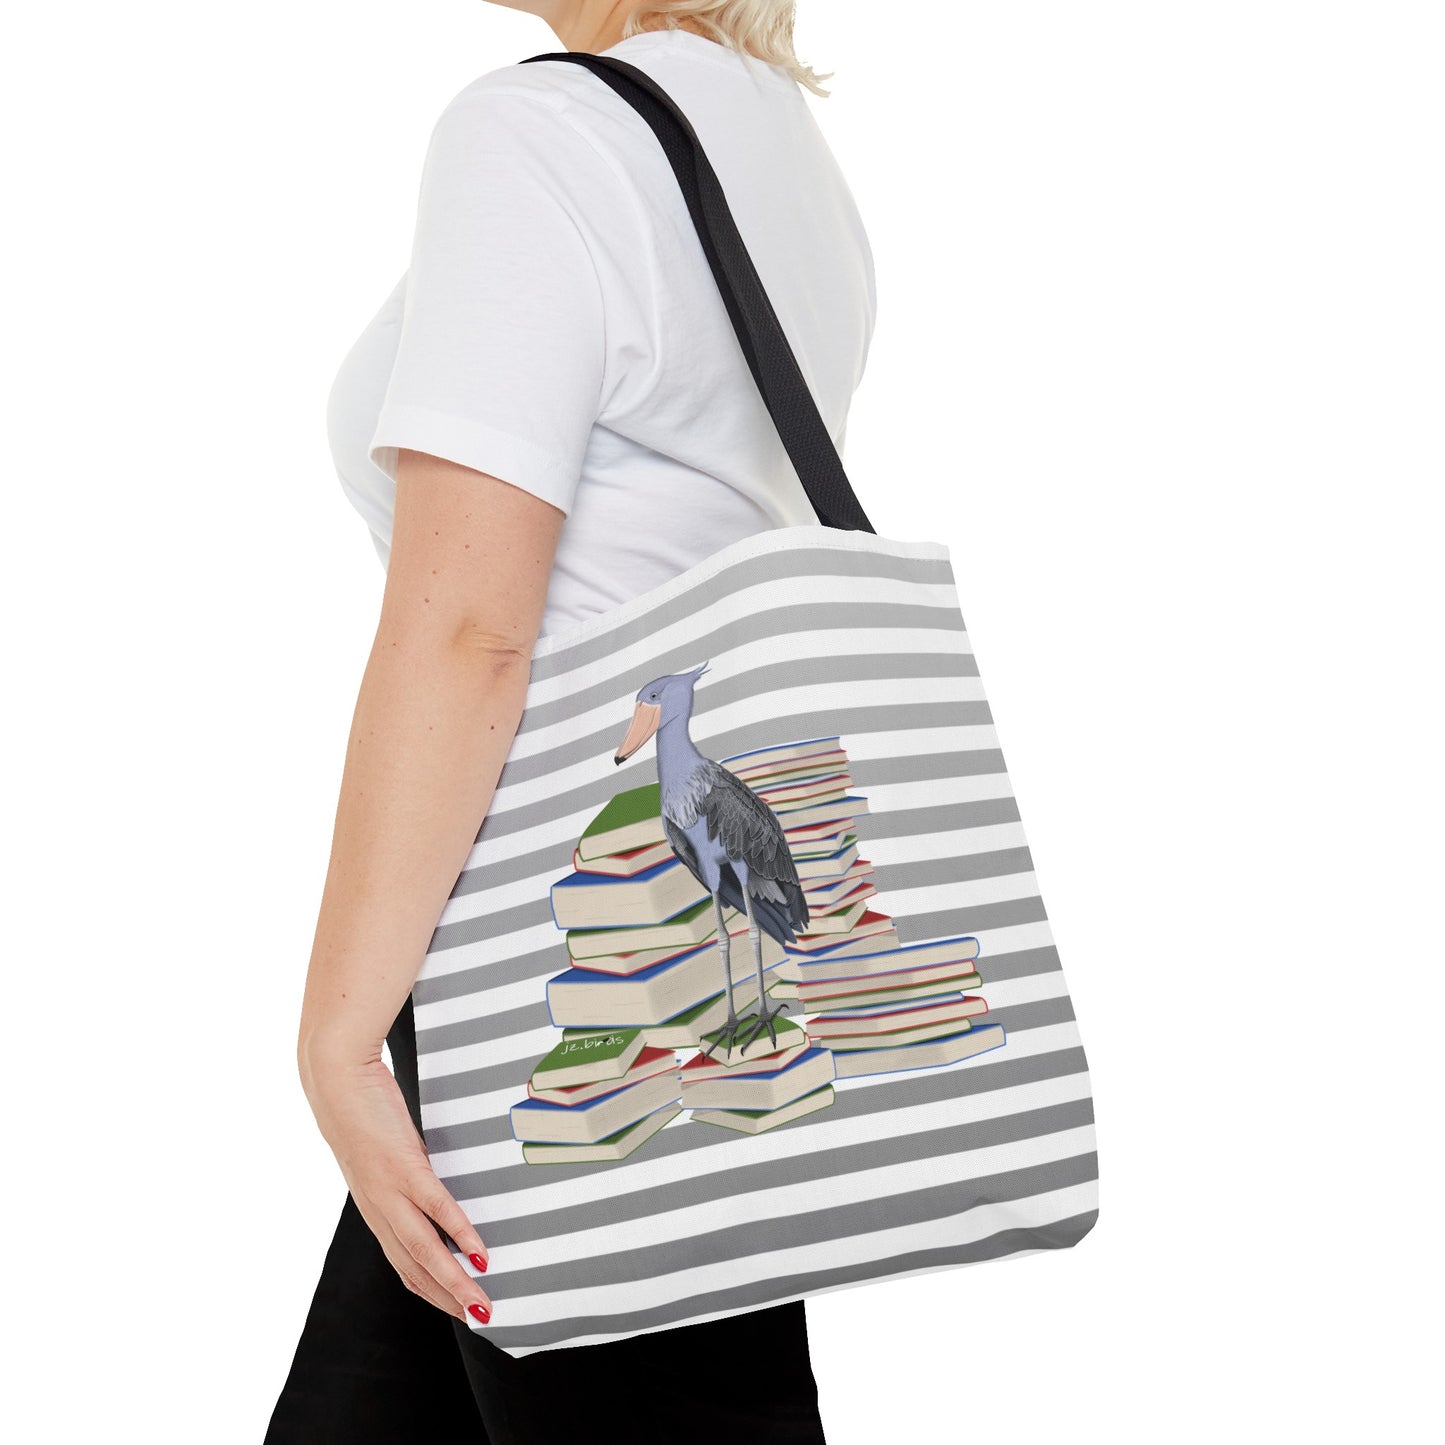 Shoebill Bird and Books Birdlover Bookworm Tote Bag 16"x16"